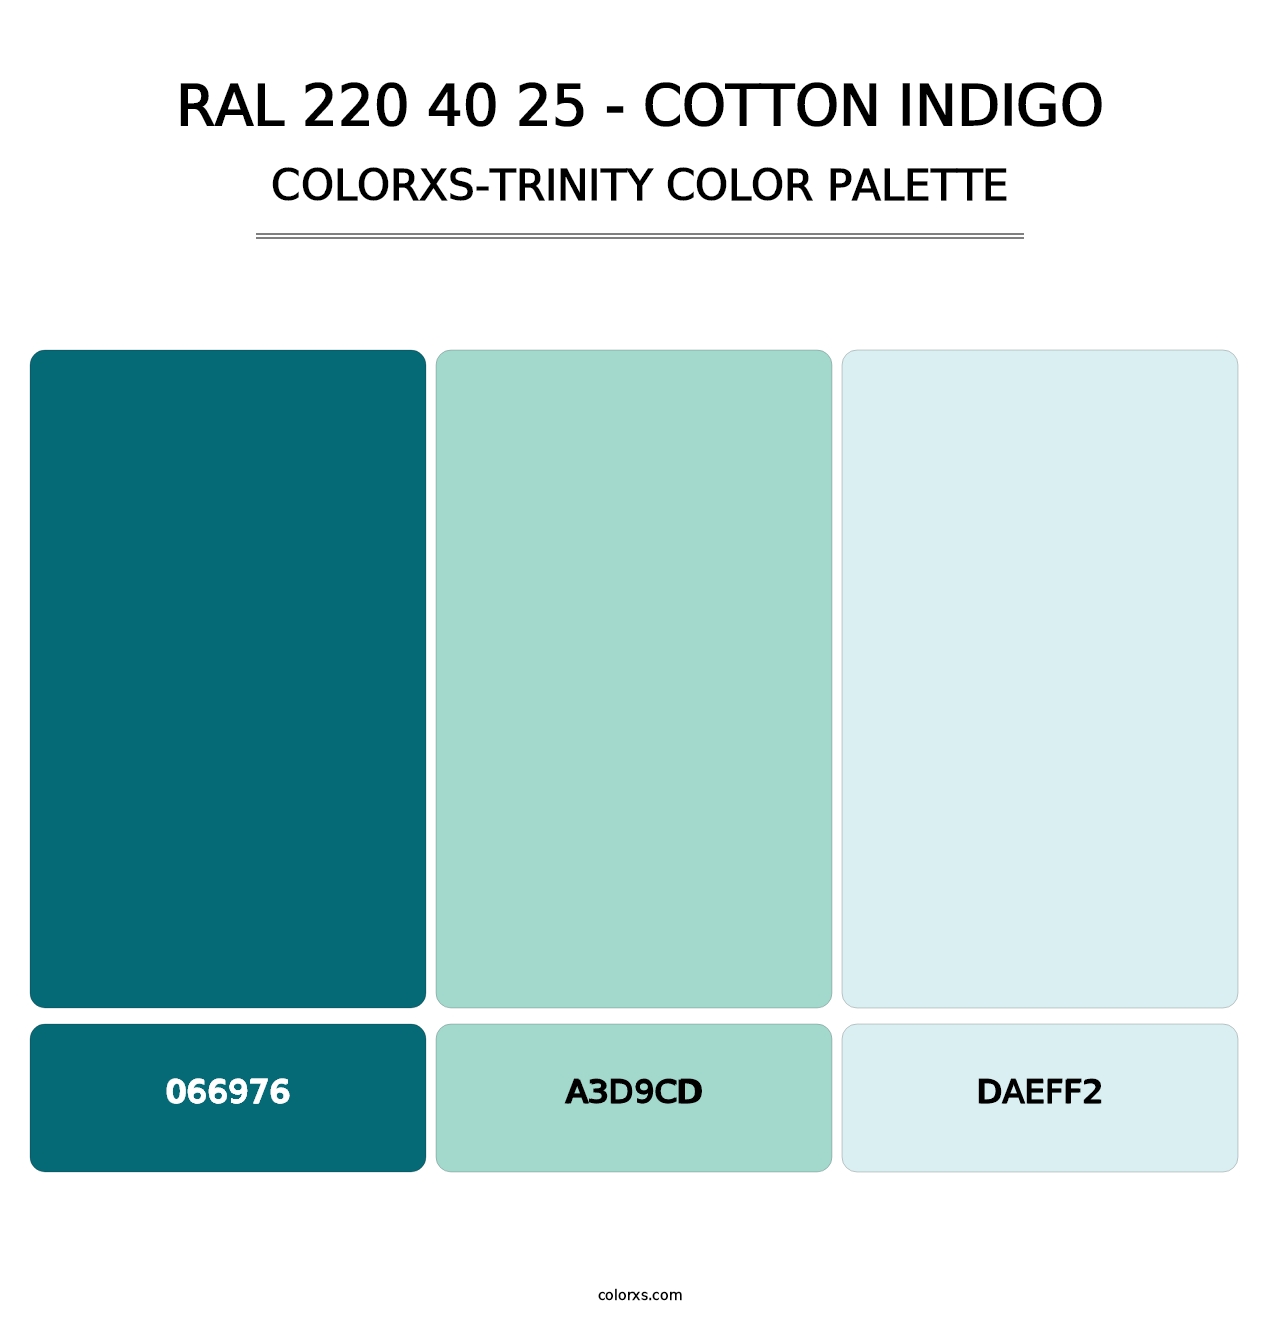 RAL 220 40 25 - Cotton Indigo - Colorxs Trinity Palette